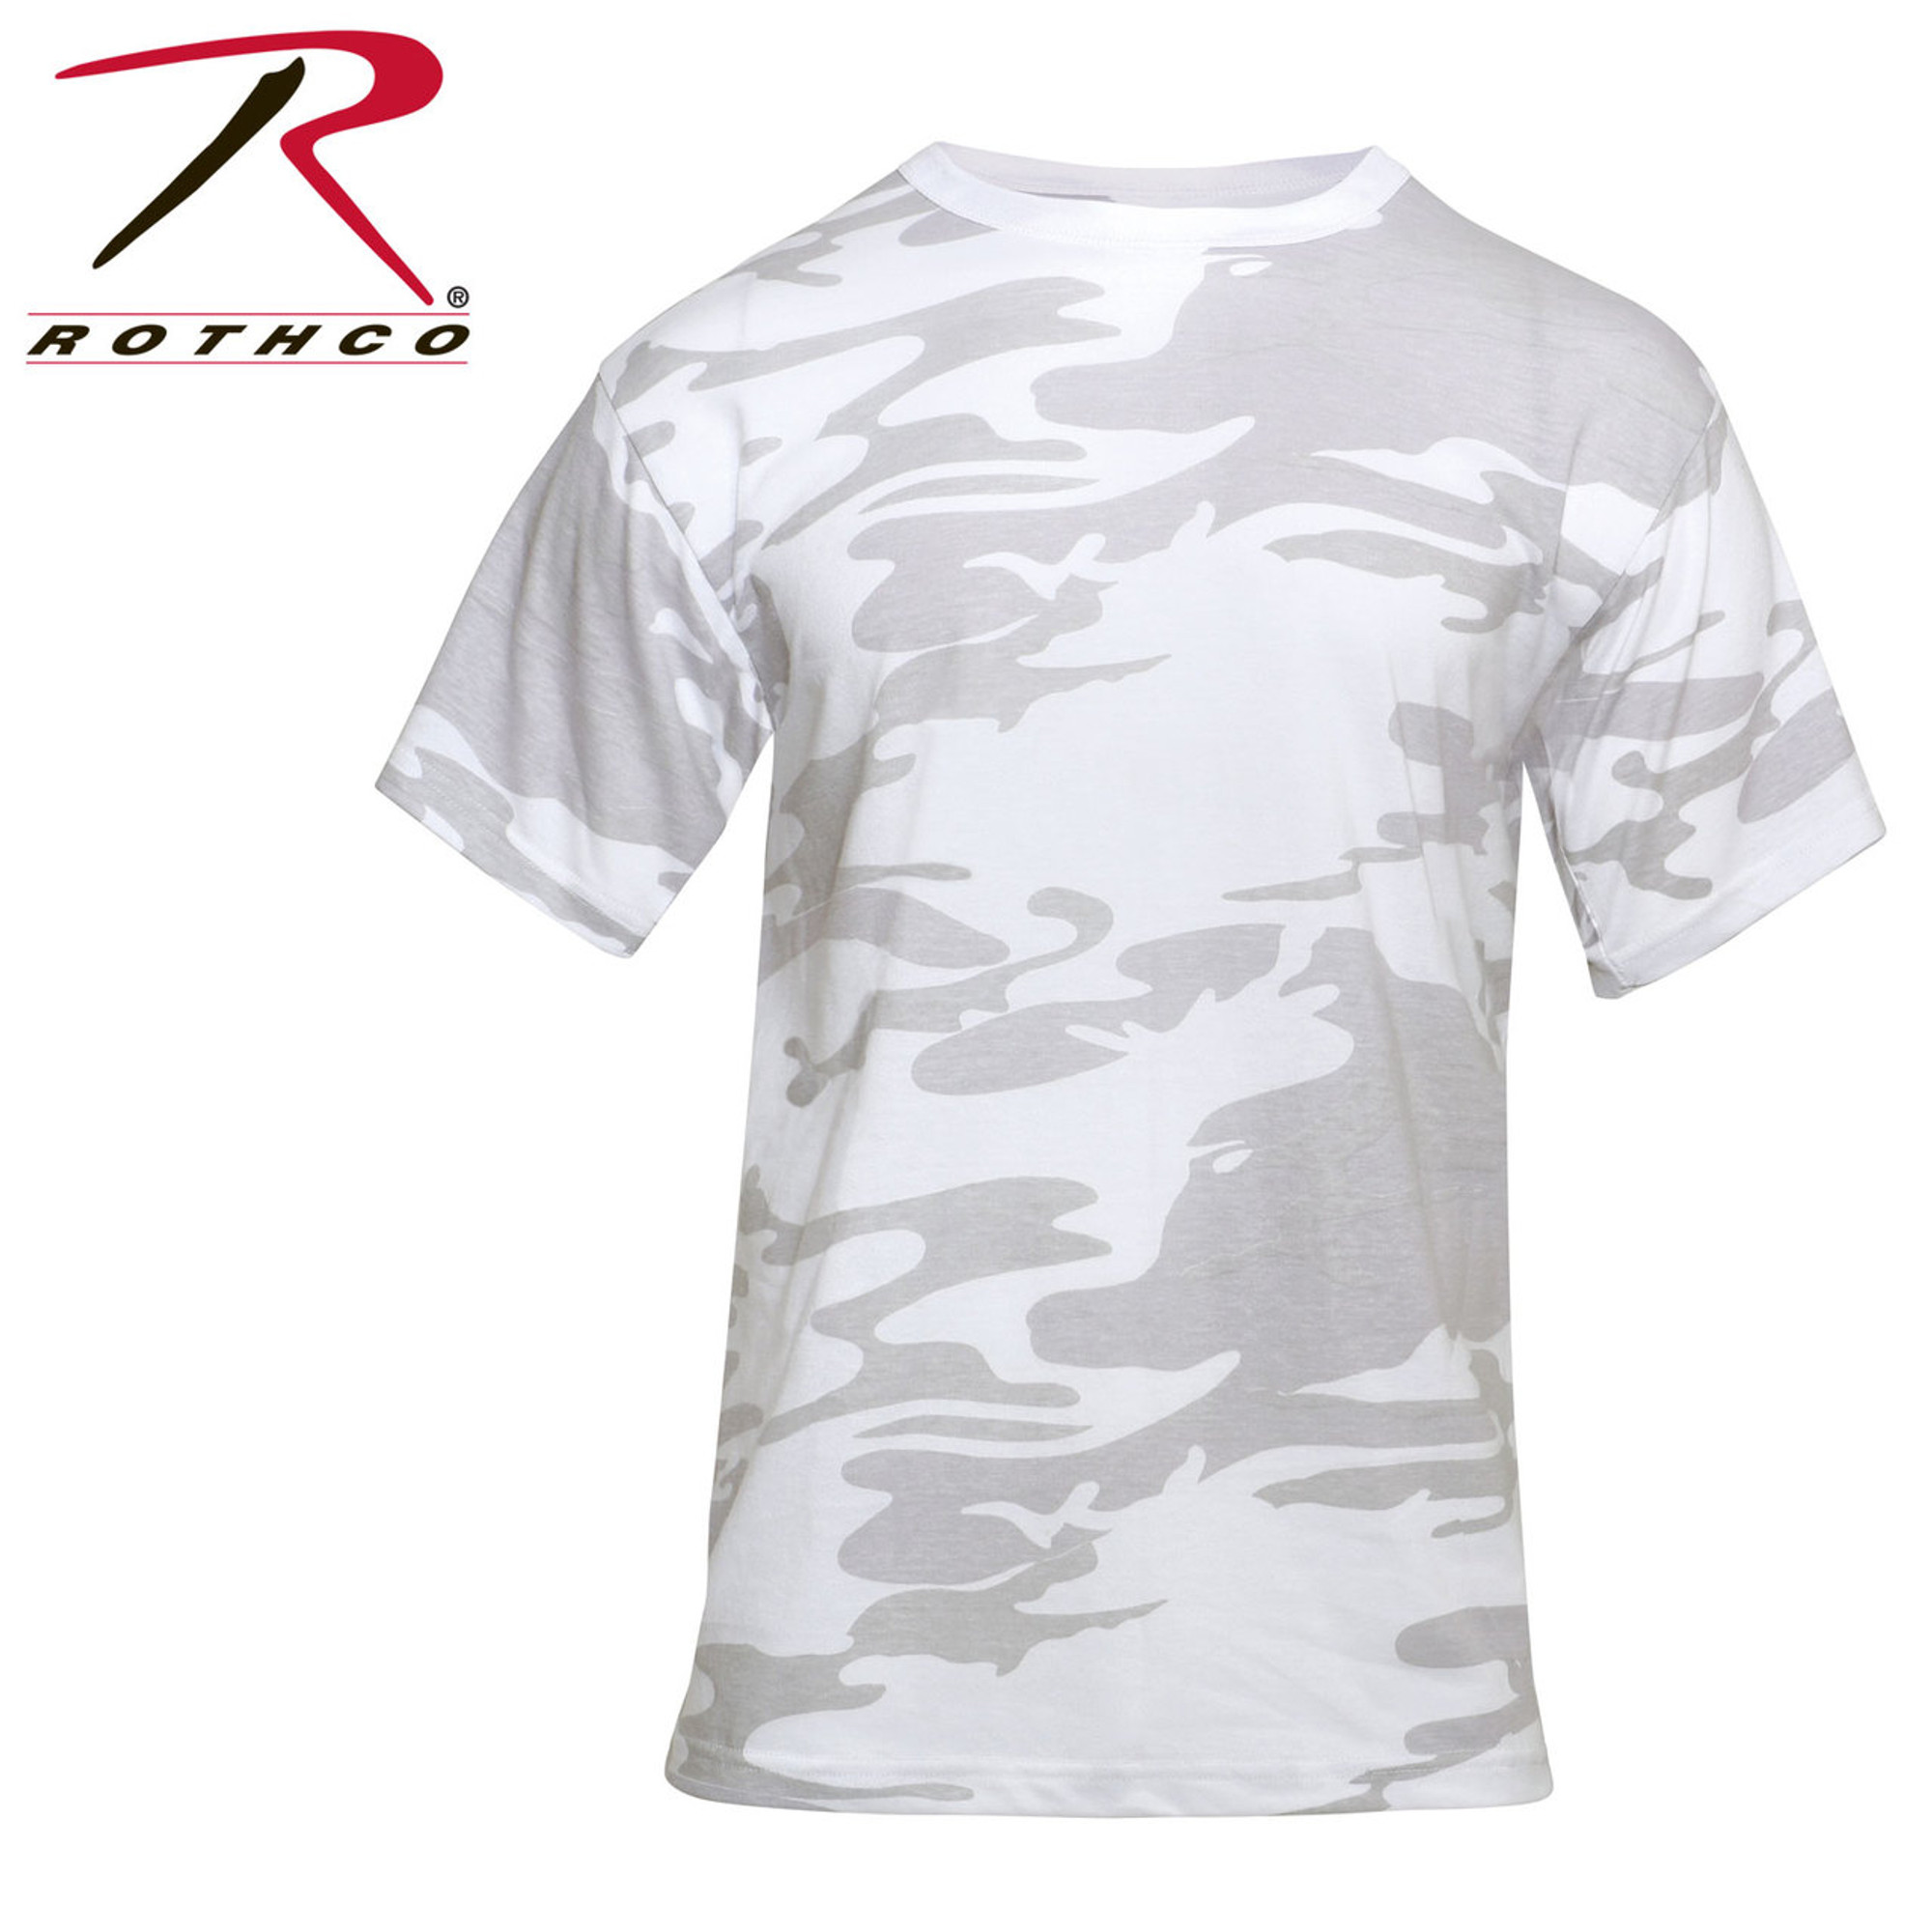 Rothco Color Camo T-Shirts - White Camo